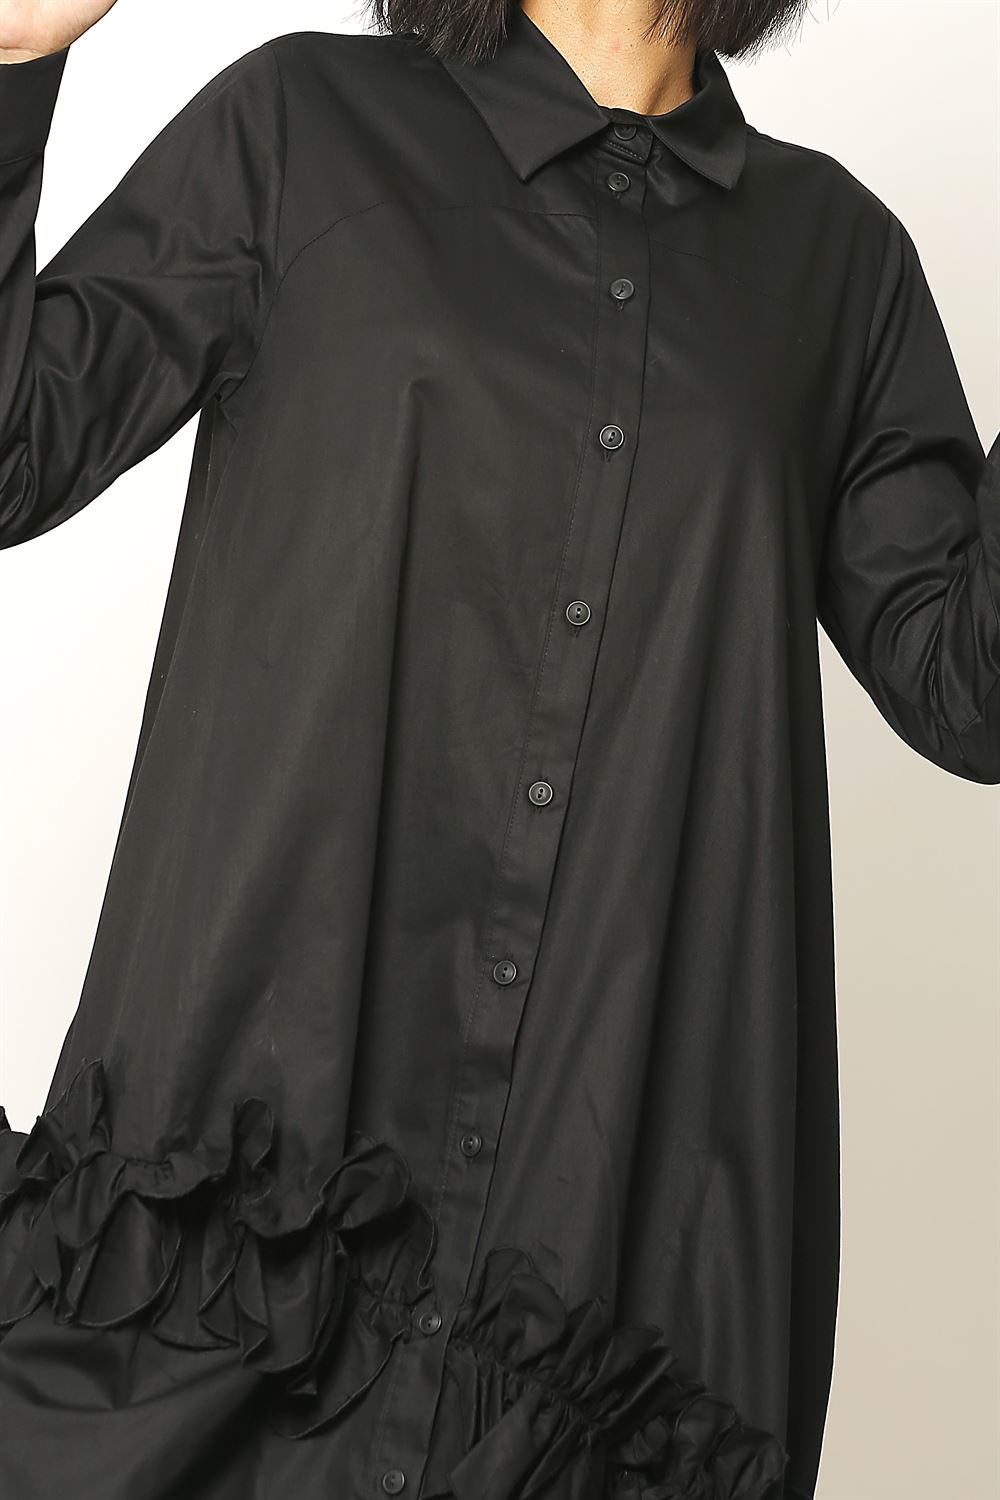 Likrasız Cotton Gömlek Elbise - Siyah